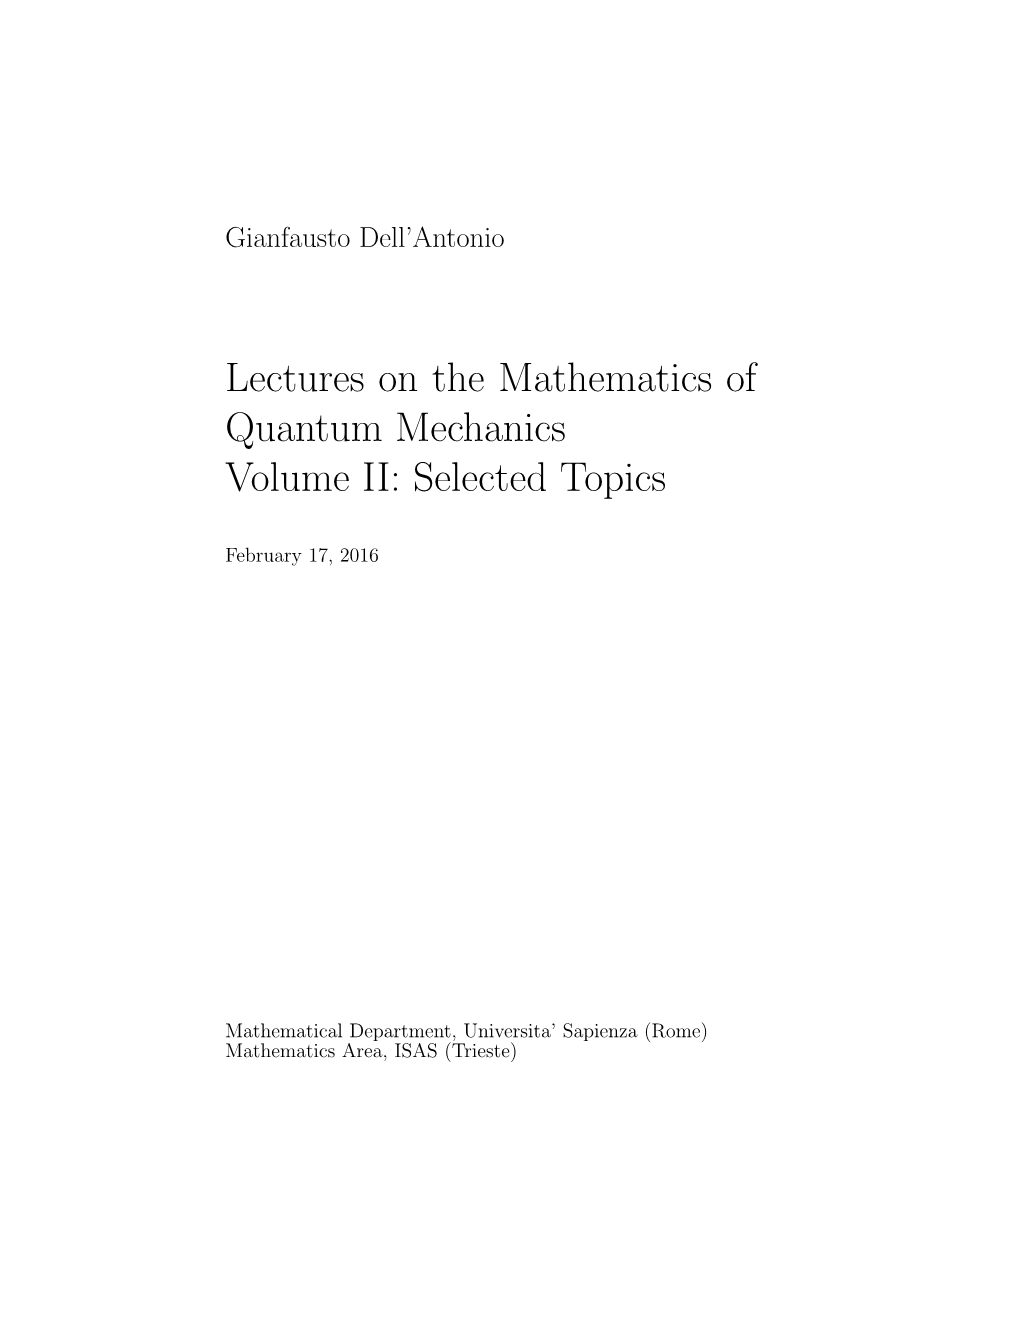 Lectures on the Mathematics of Quantum Mechanics Volume II: Selected Topics